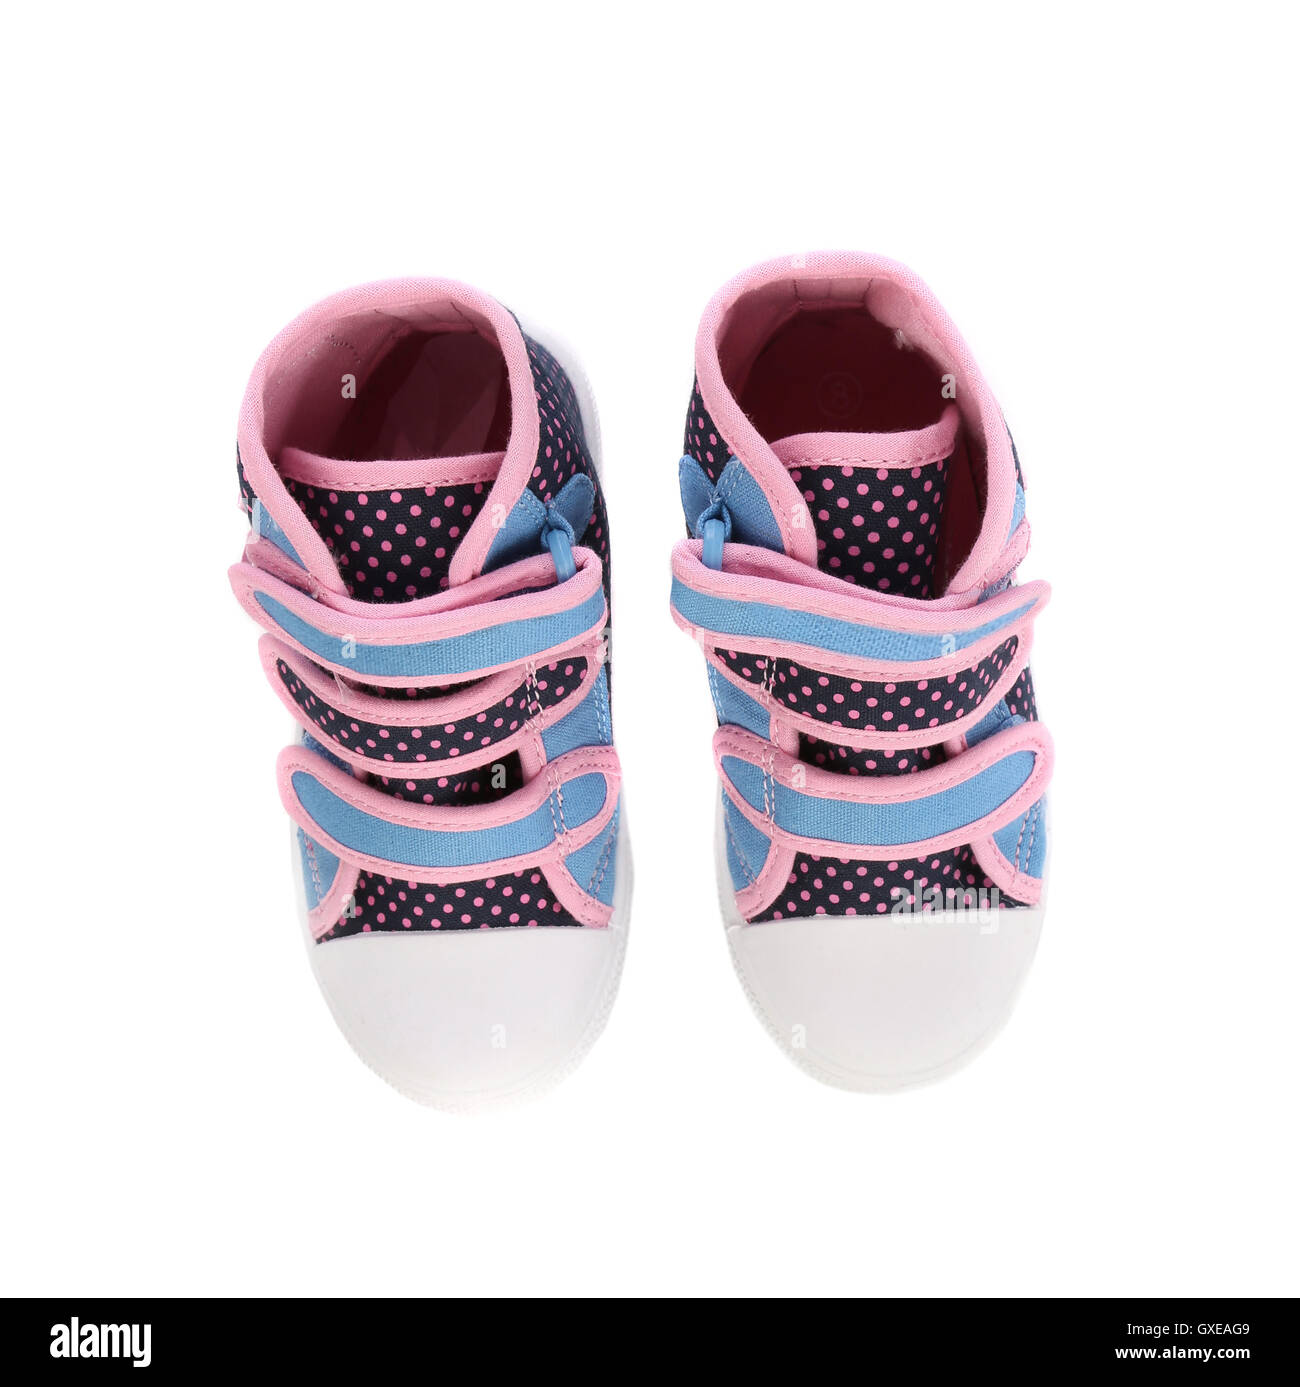 Girls shoes Stock Photo - Alamy